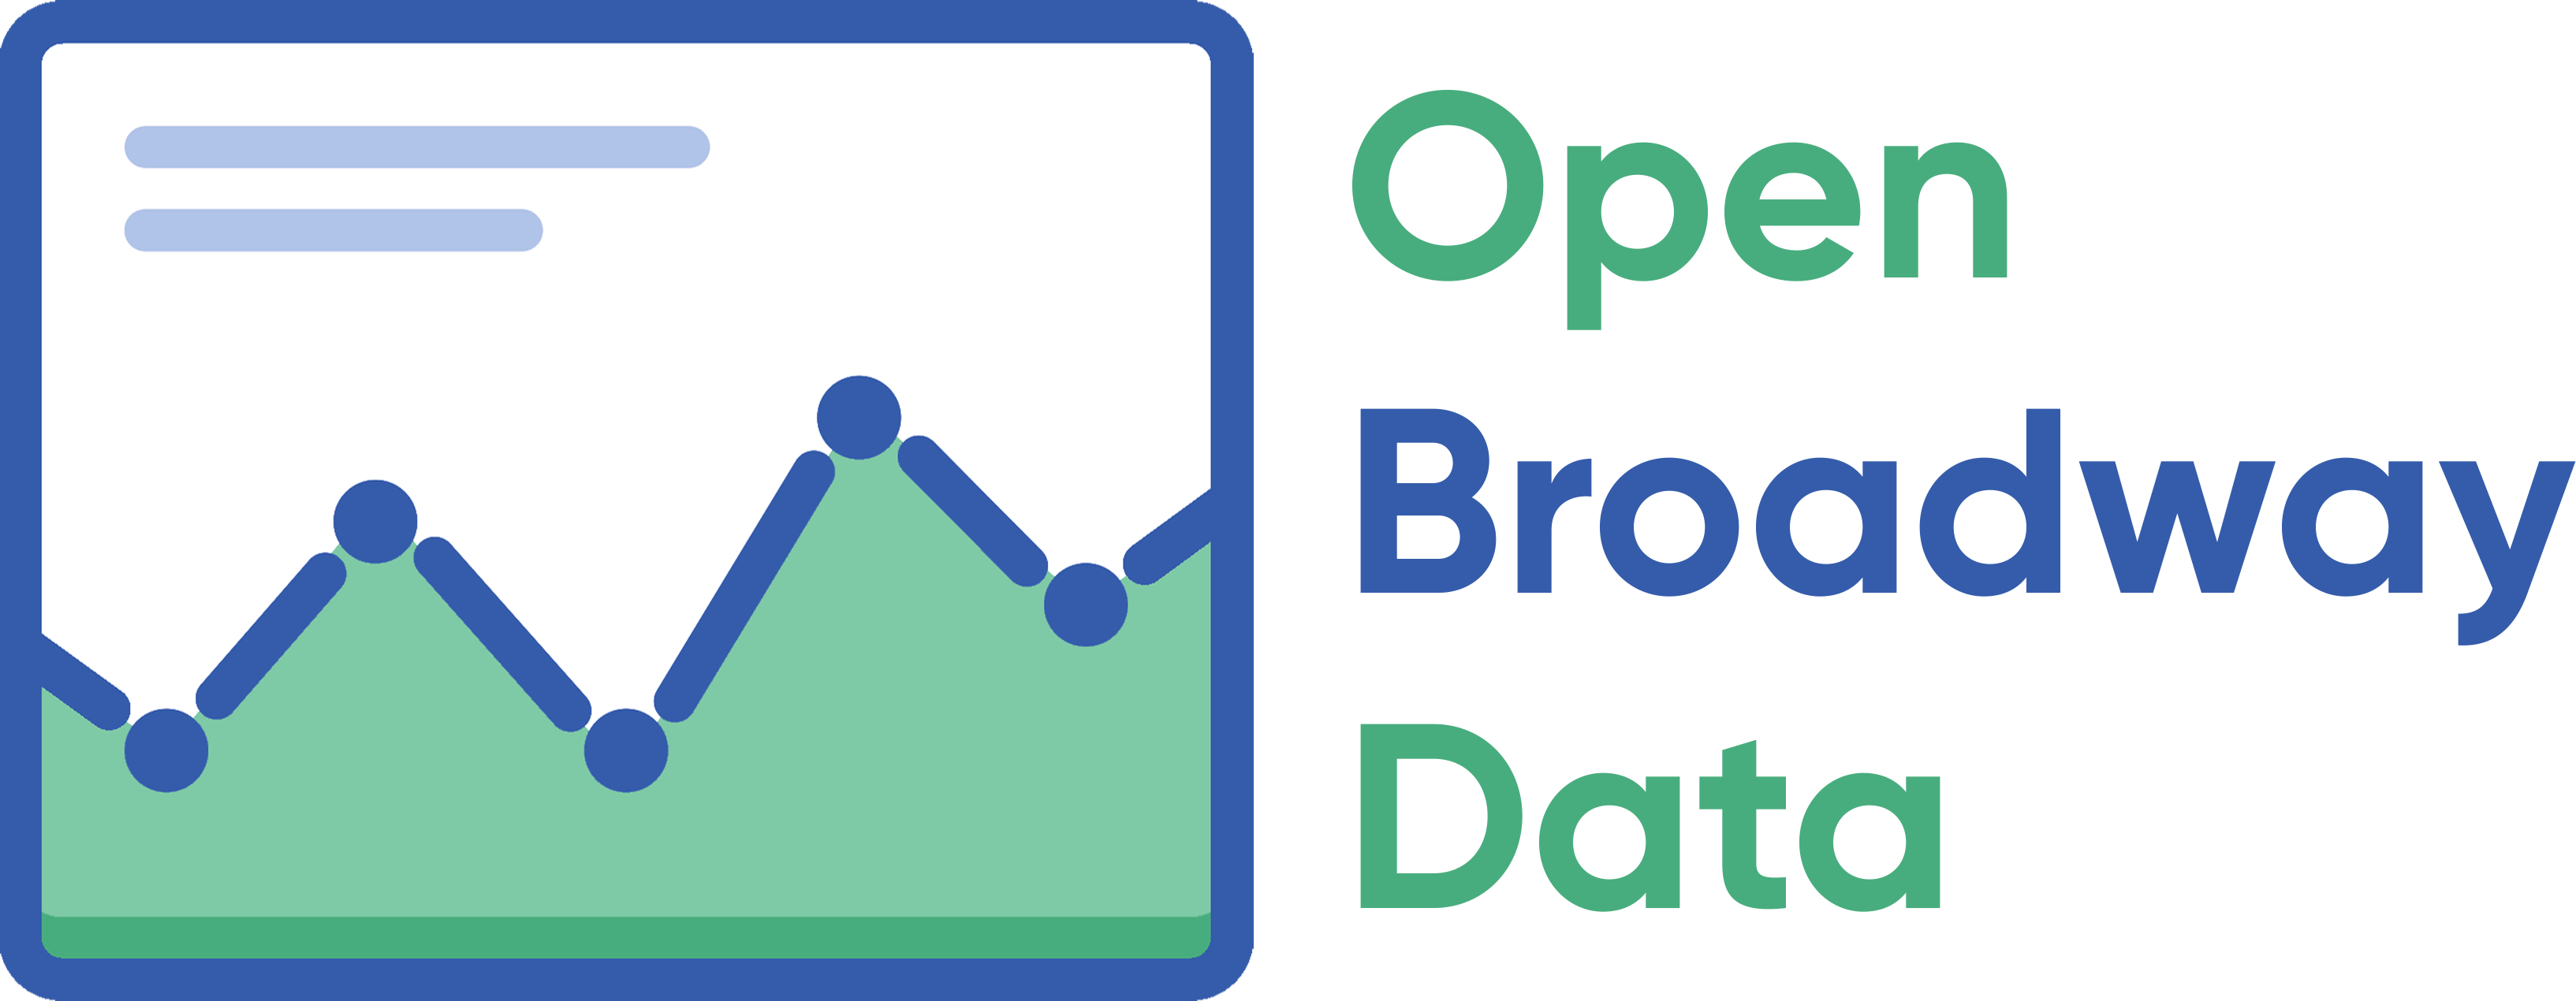 Open Broadway Data Logo